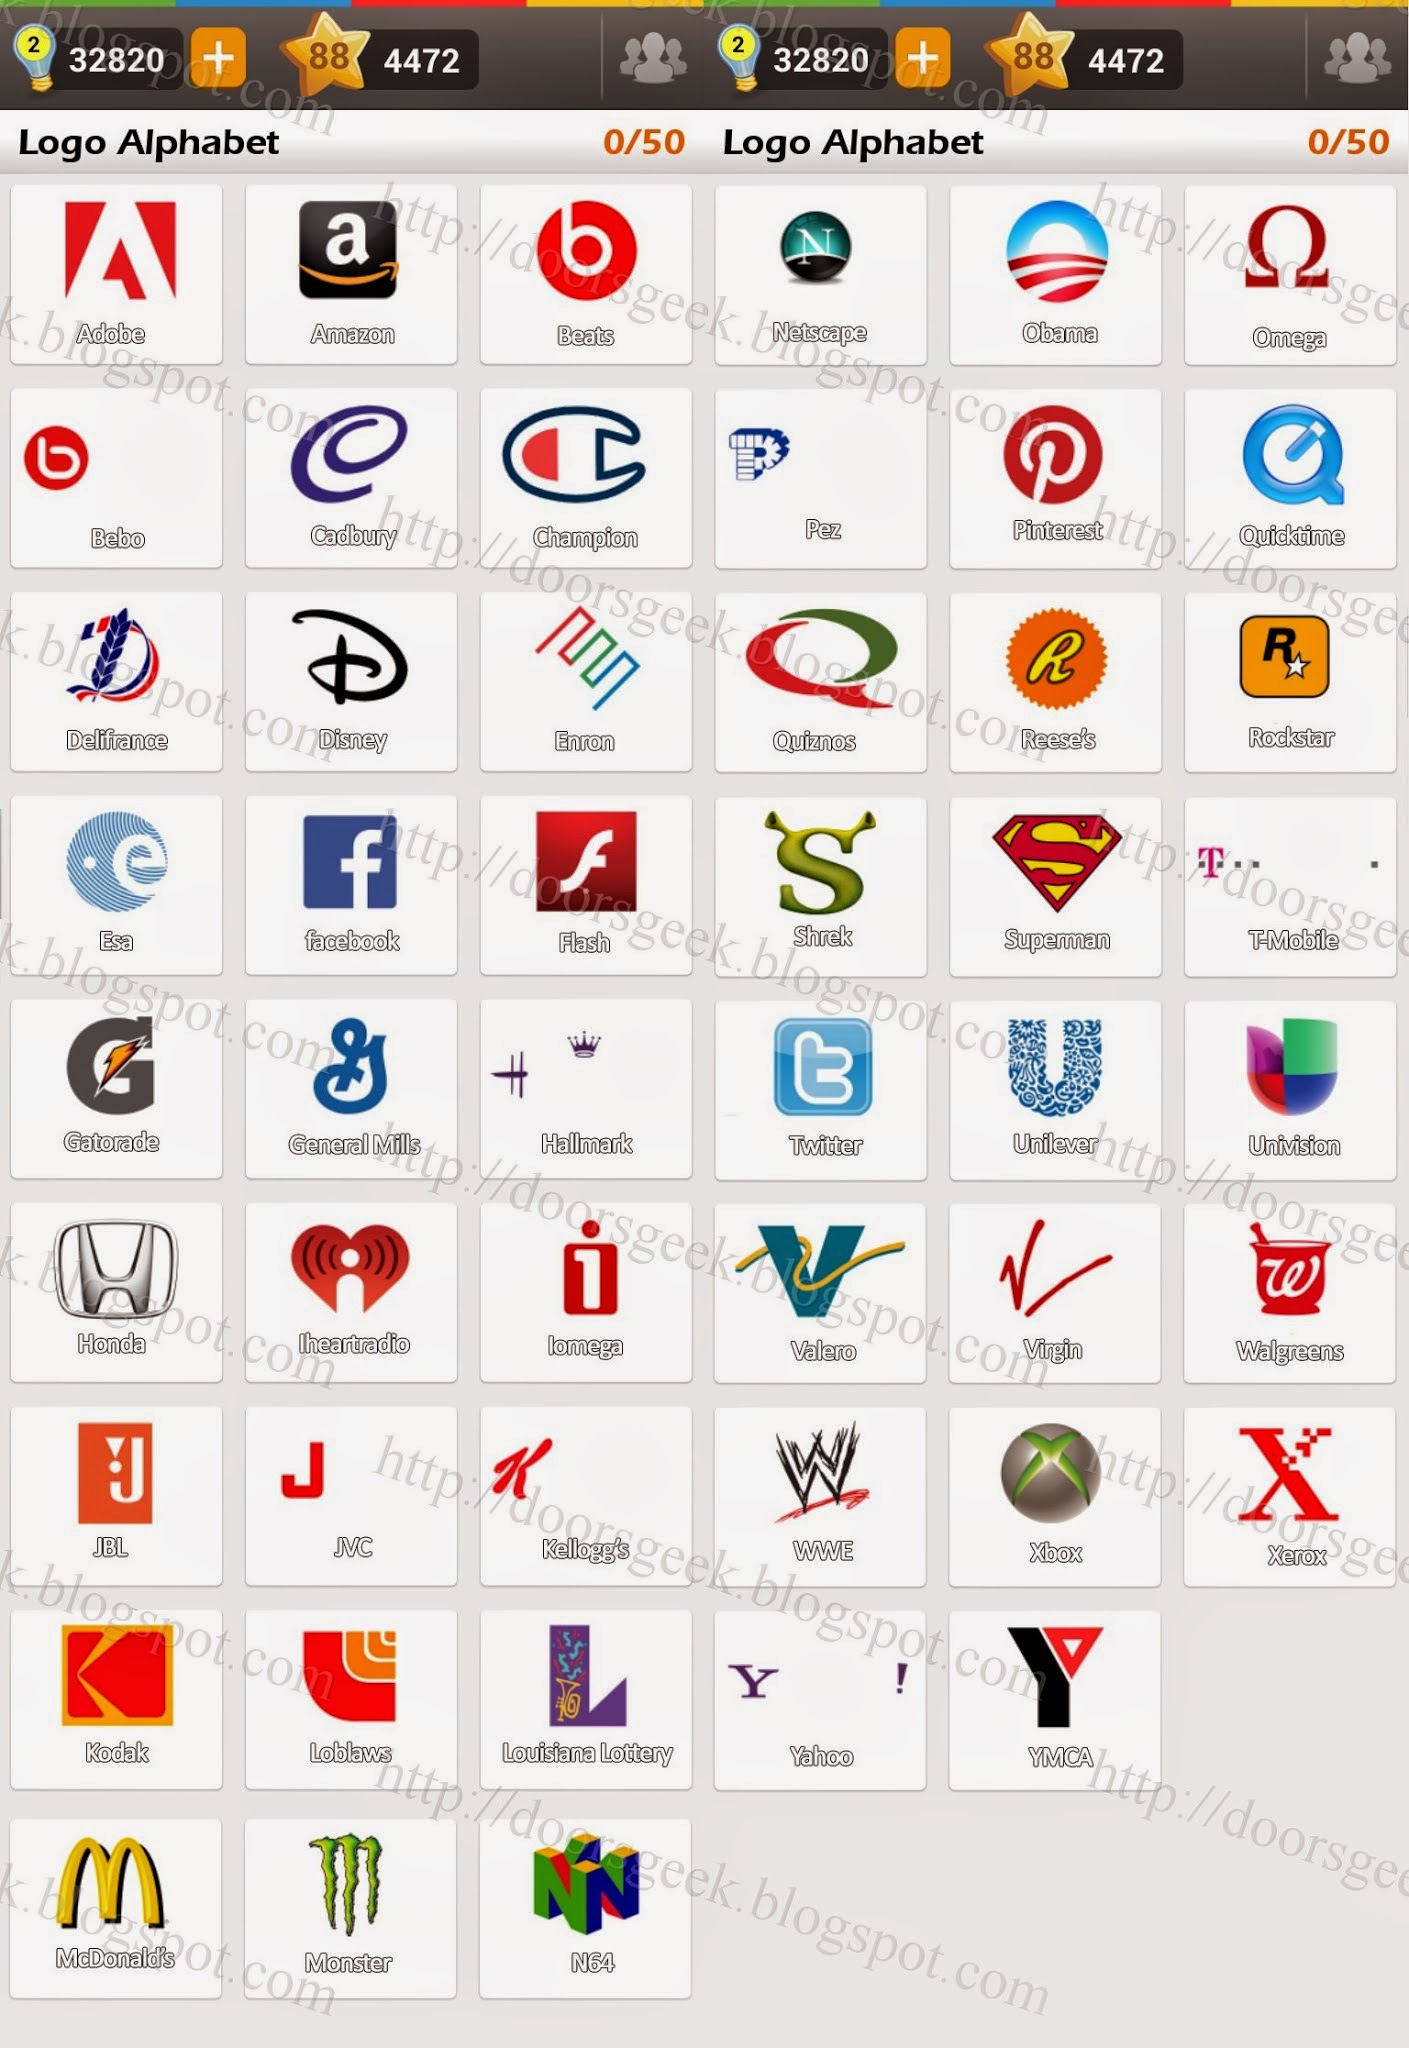 Logo Guess the Brand [Bonus] Logo Alphabet ~ Geek